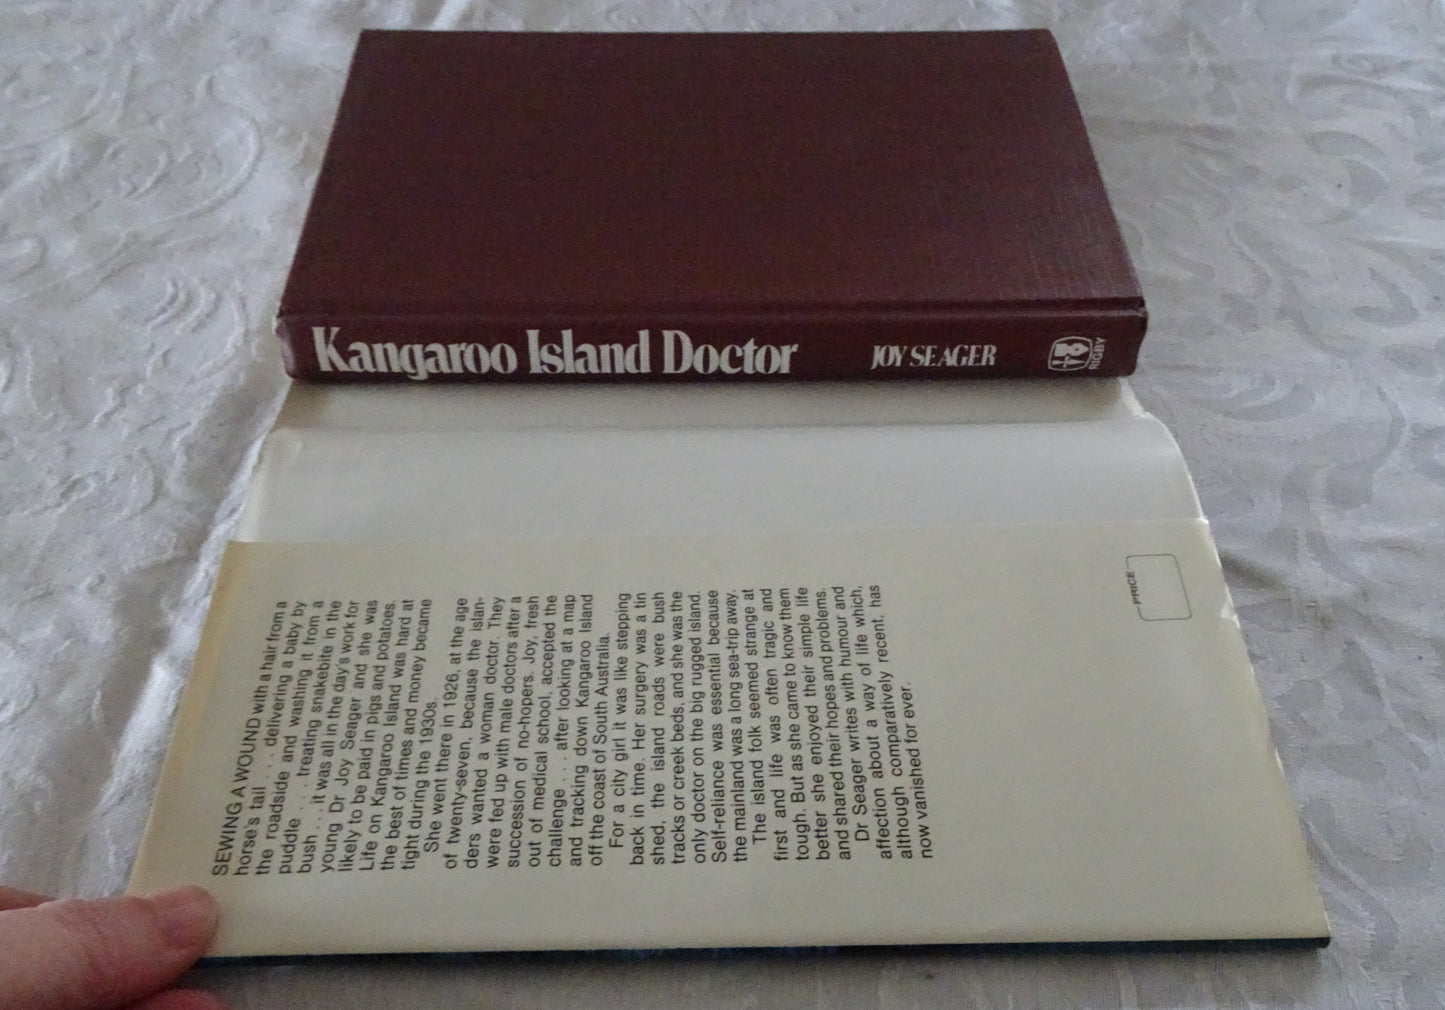 Kangaroo Island Doctor by Joy Seager